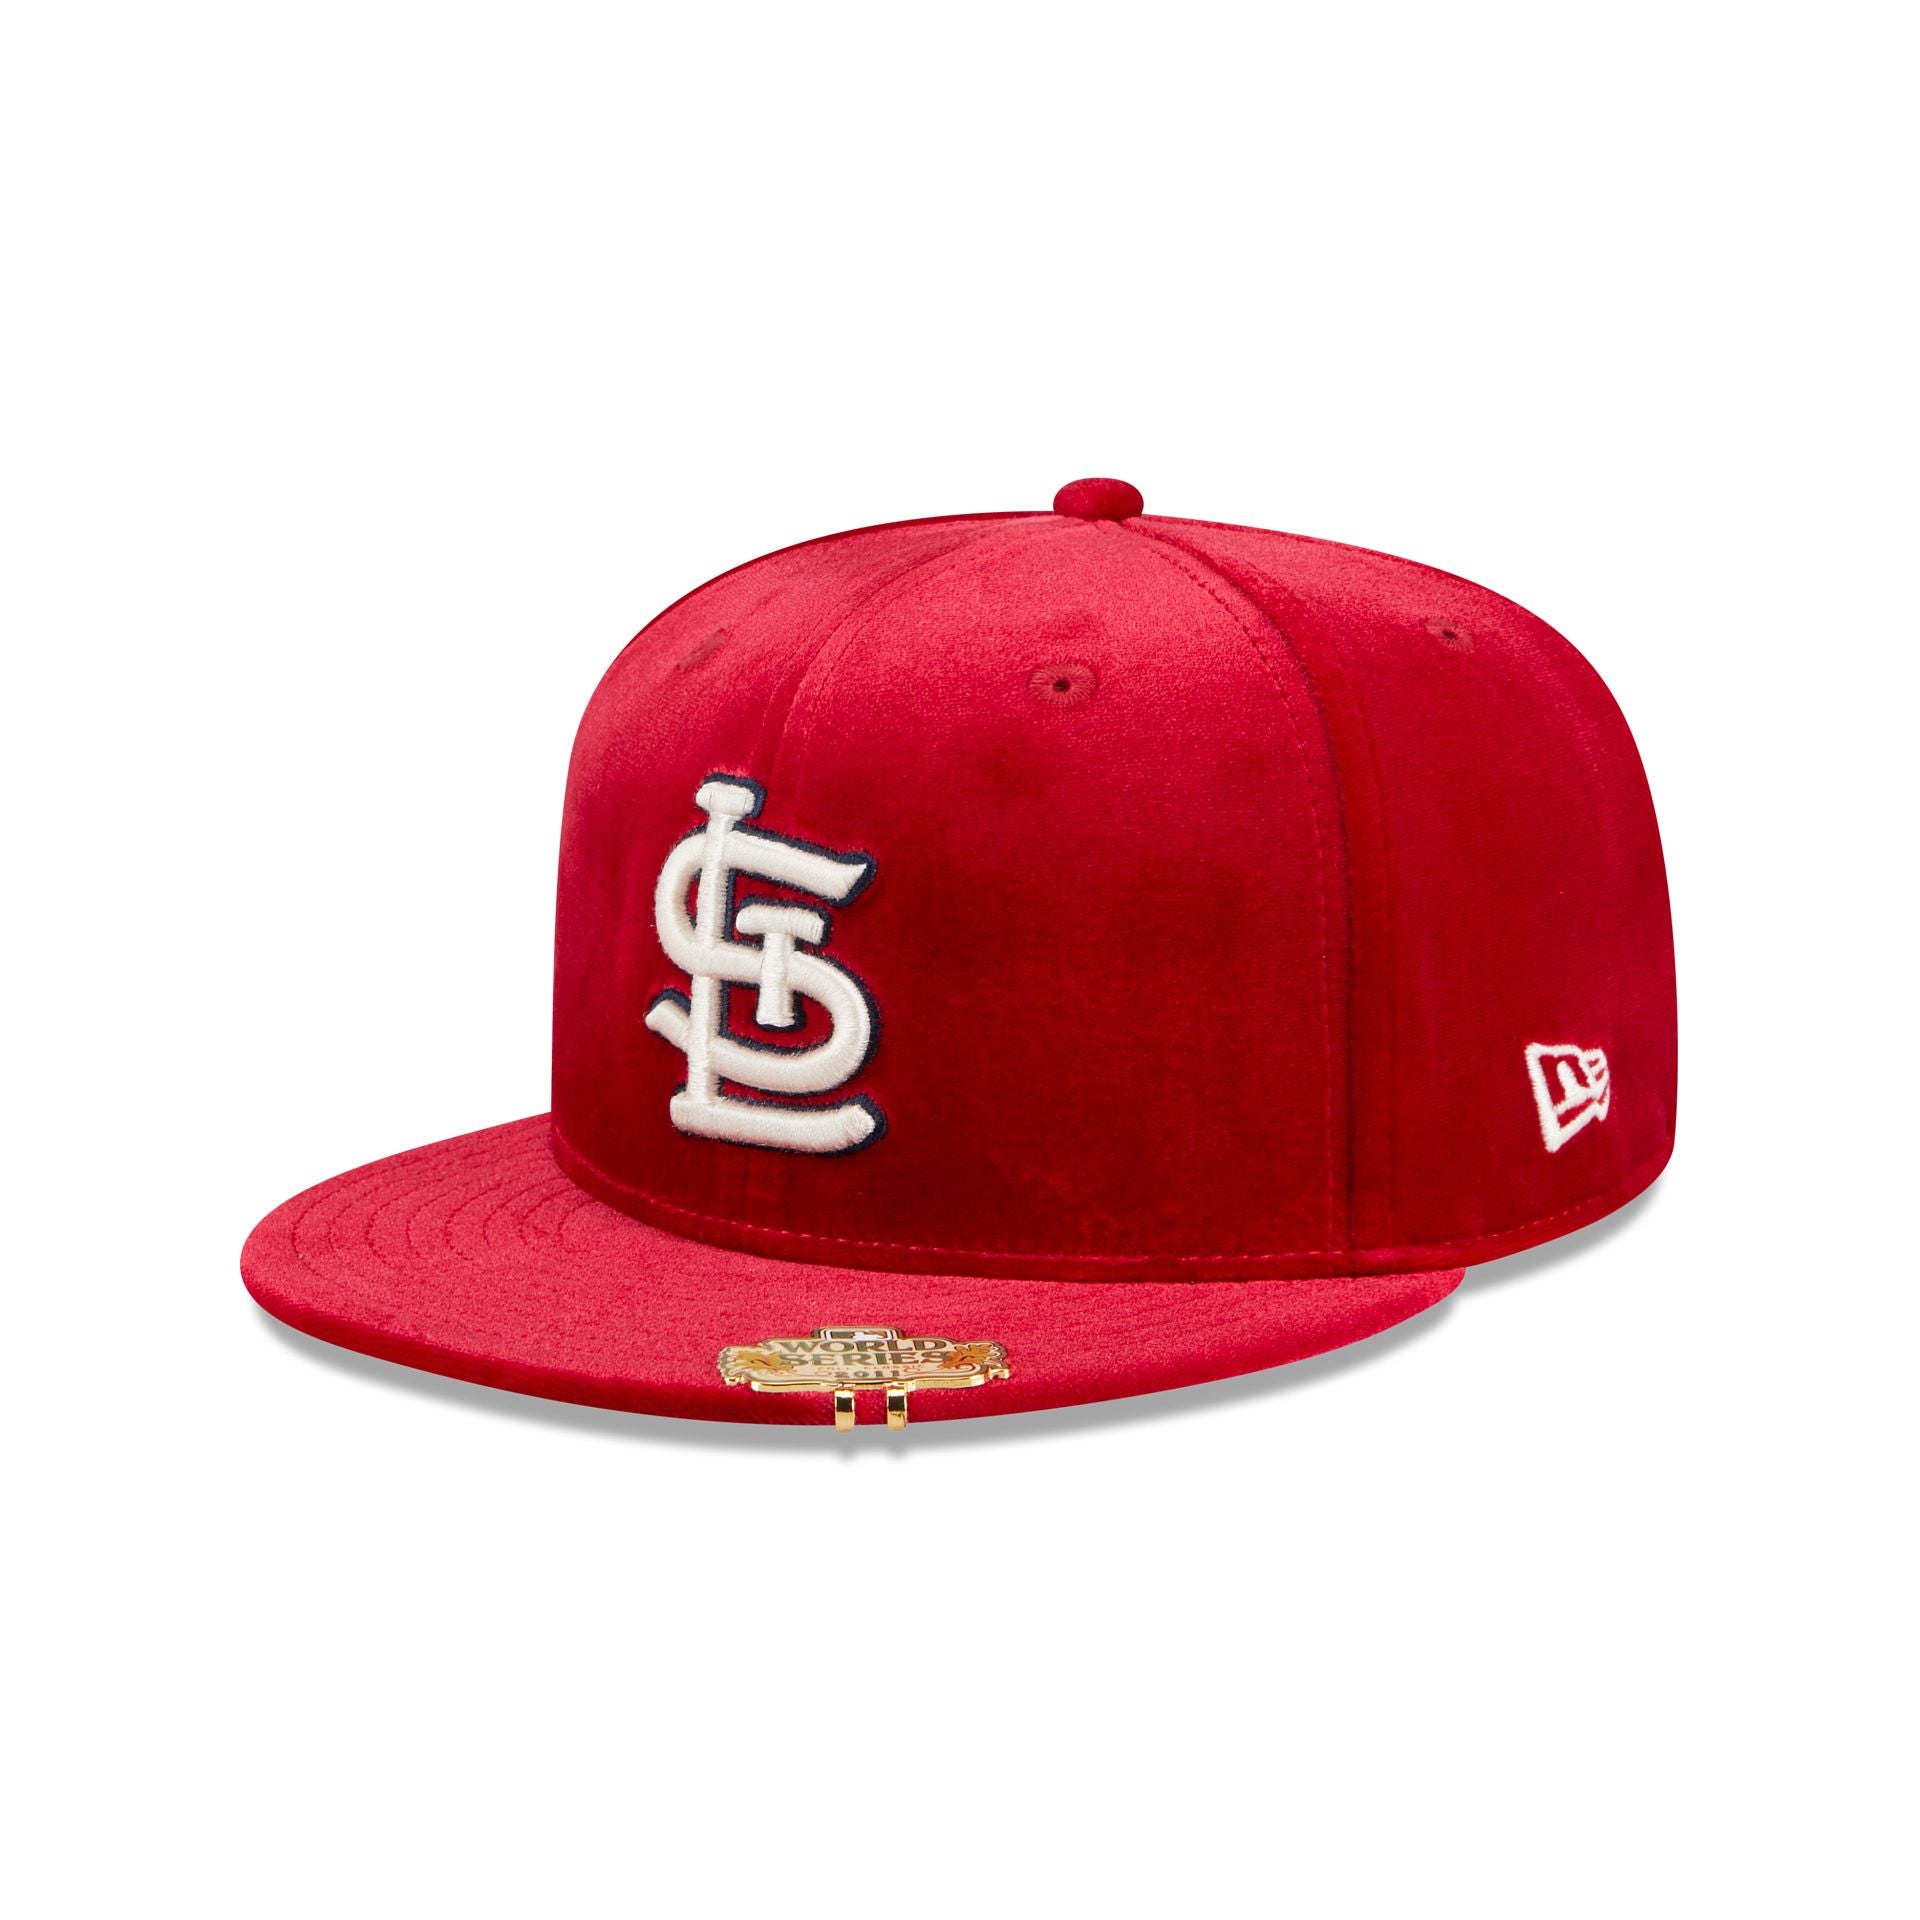 St. Louis Cardinals Mens Hat, Cardinals Baseball Hats, Baseball Cap